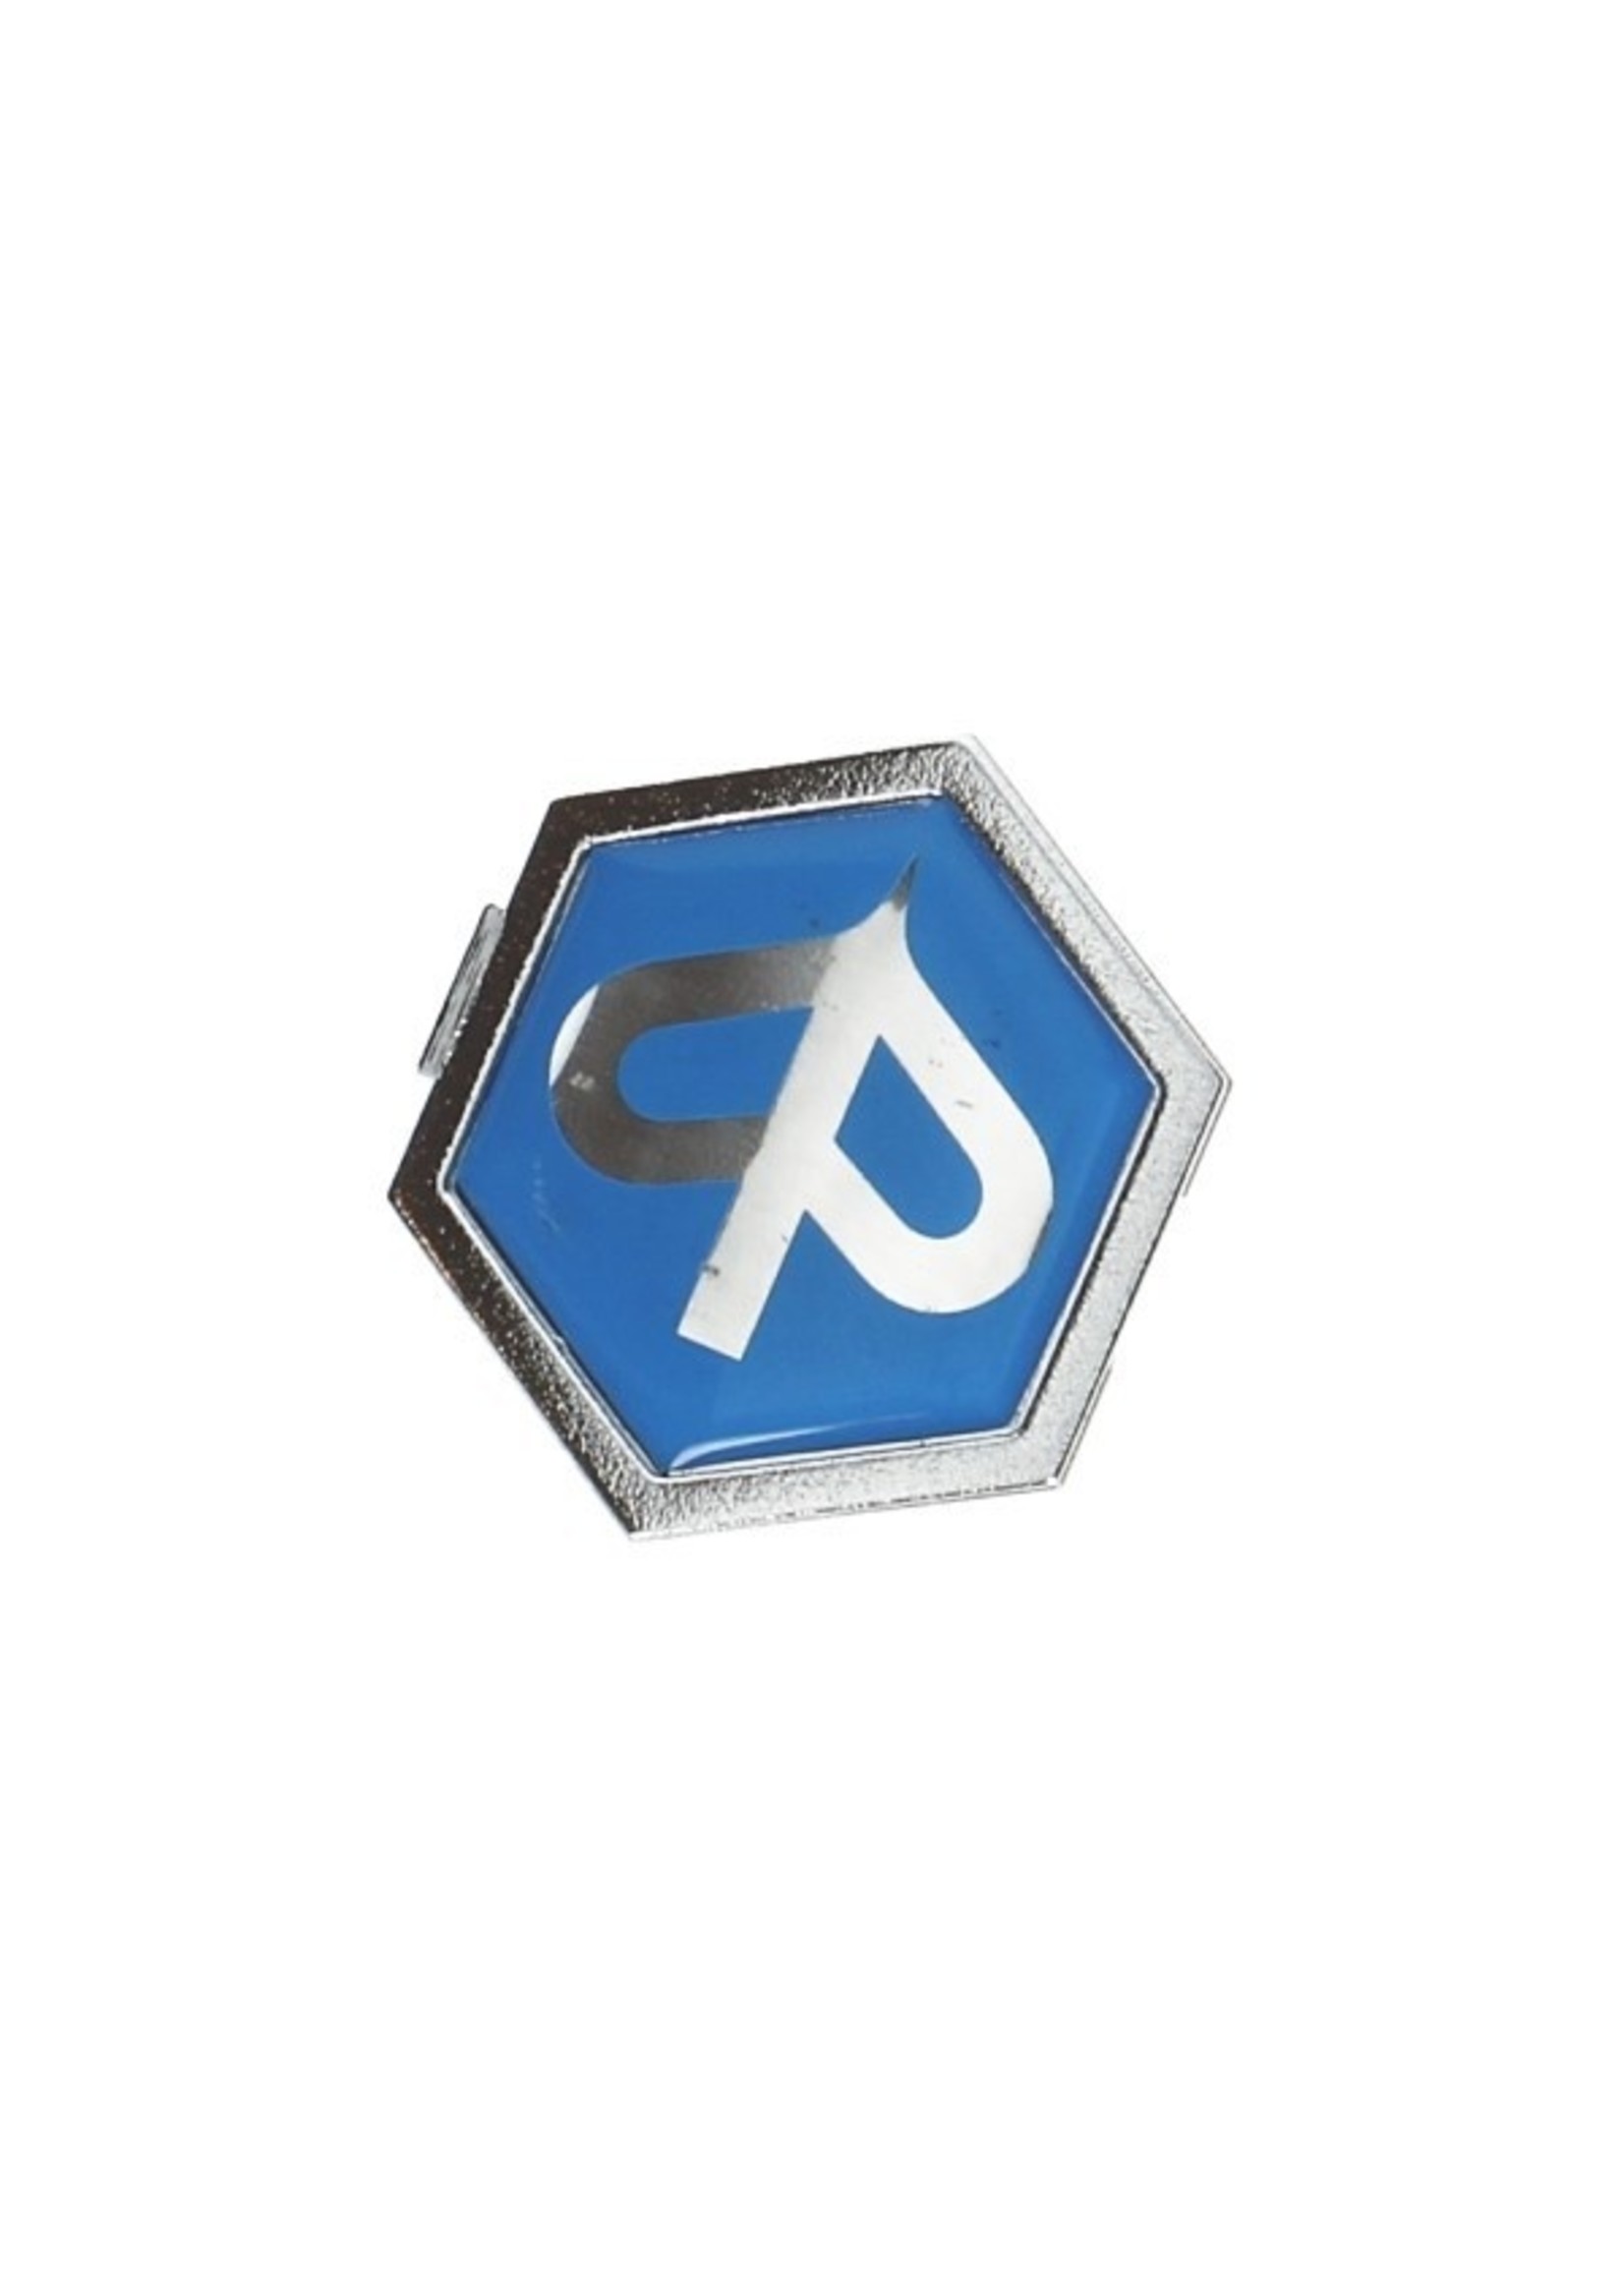 Piaggio logo klik piaggio voorscherm sfera chroom/blauw